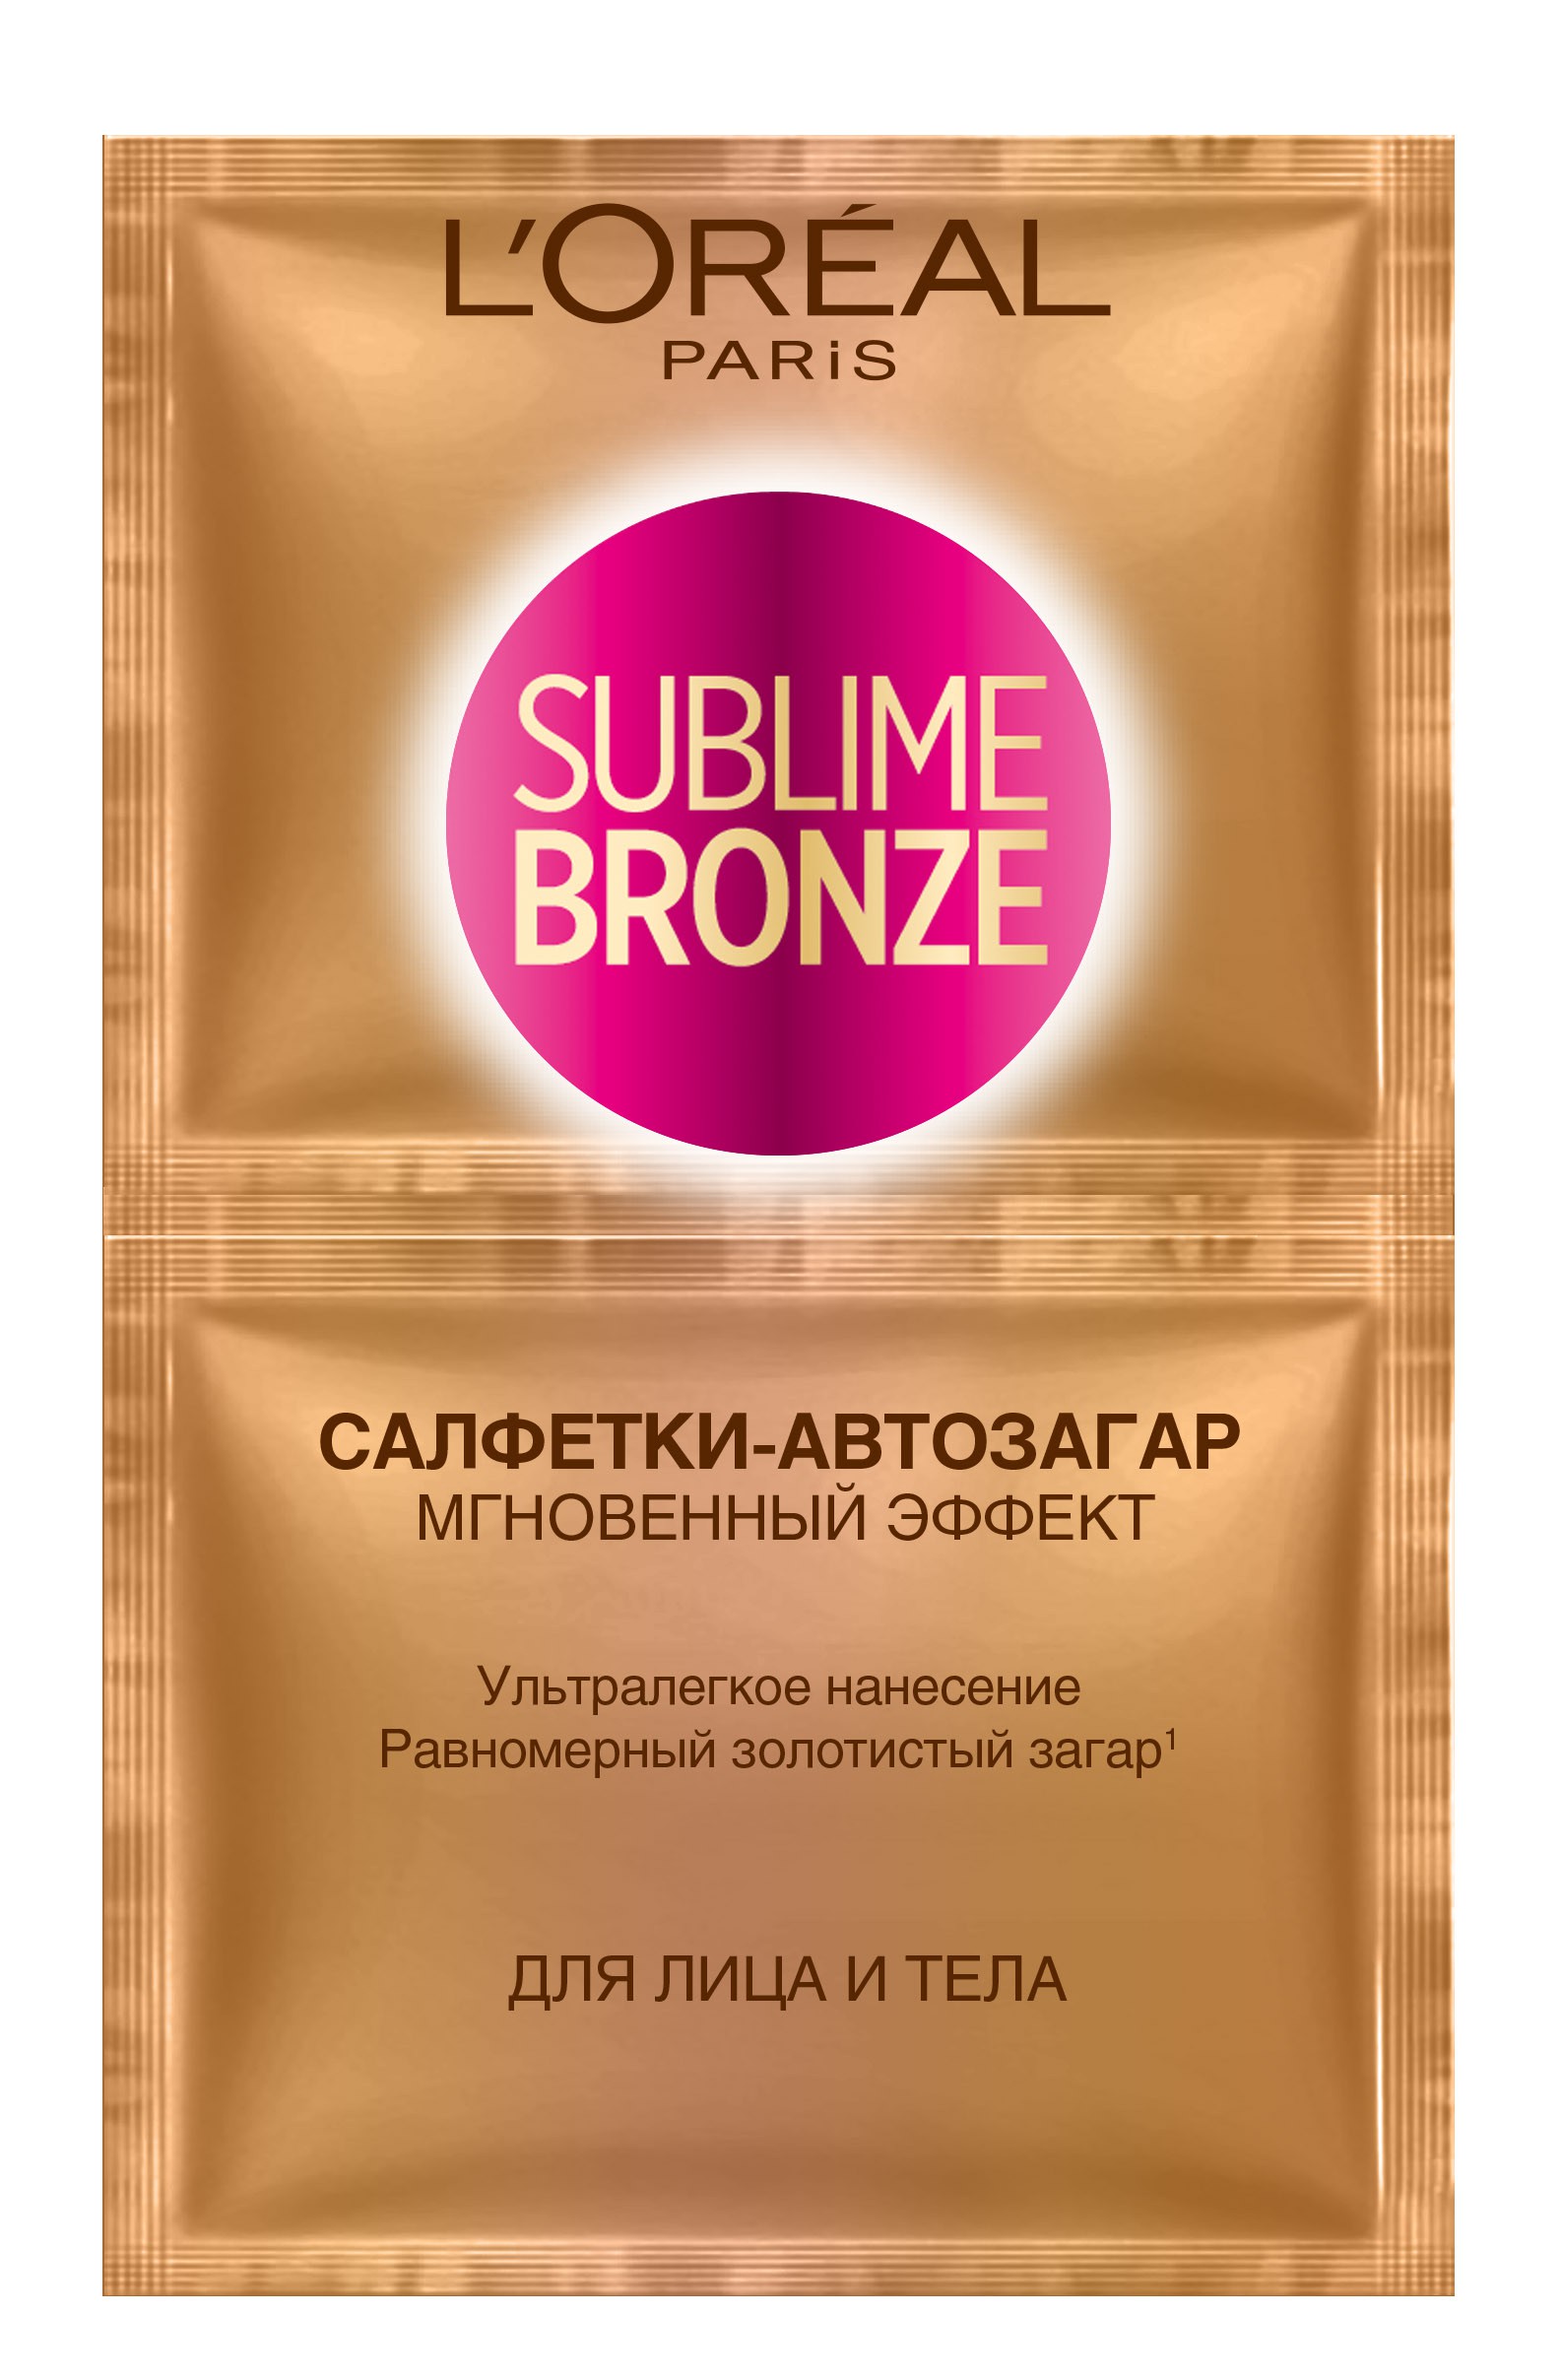 L'Oreal Paris Sublime Bronze Салфетки-автозагар, для лица и тела, 2 х 5,6 мл